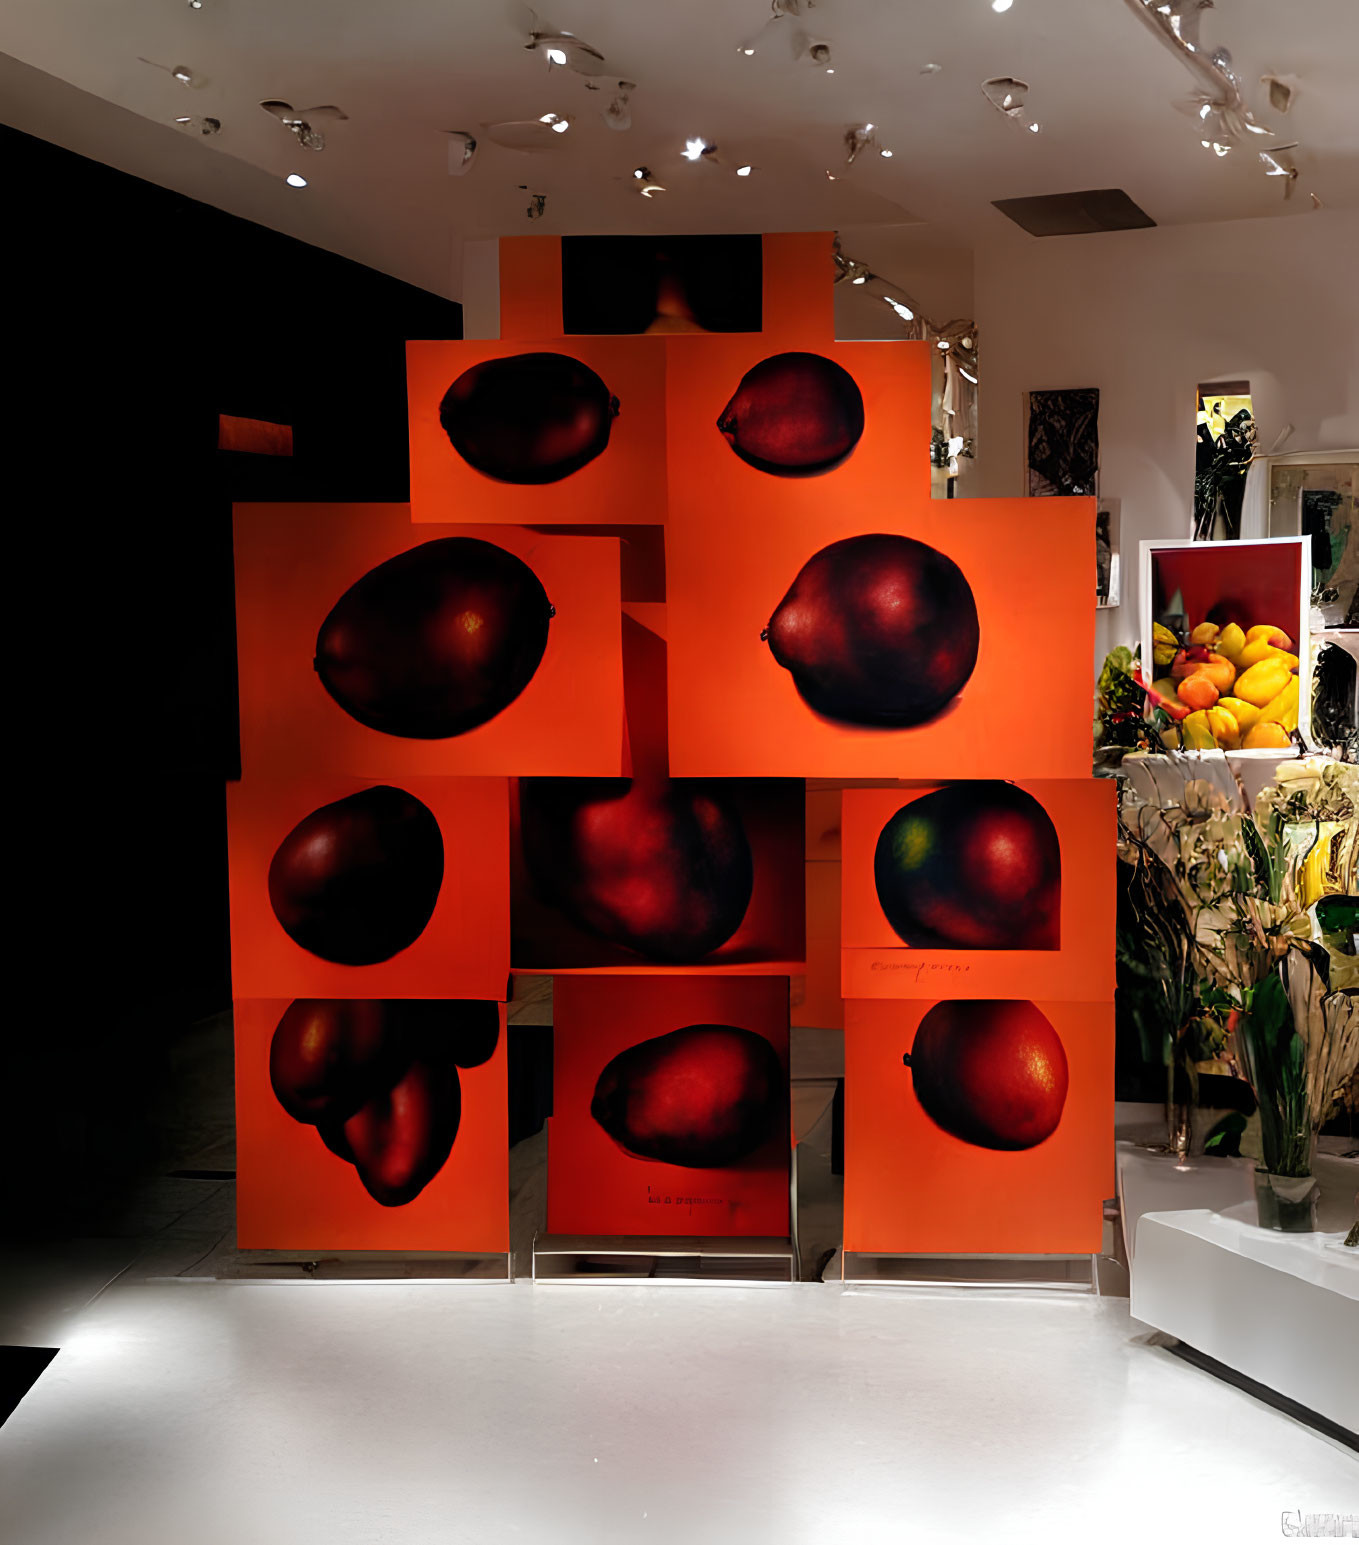 Vivid red apples on orange panels in dimly lit exhibit